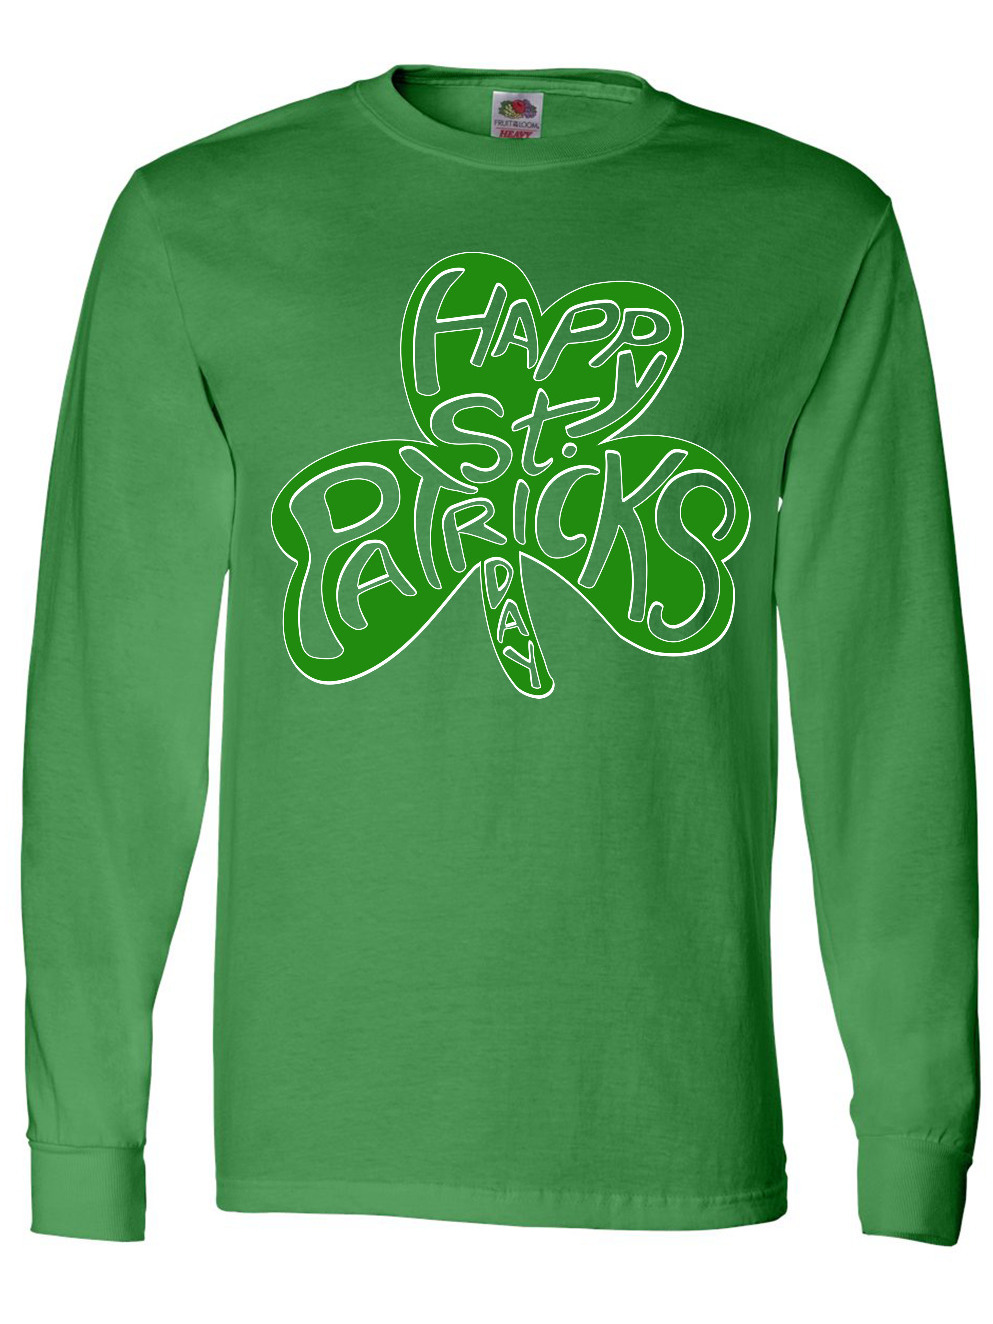 Inktastic Happy St. Patrick's Day- green shamrock cutout Long Sleeve T-Shirt - image 1 of 4